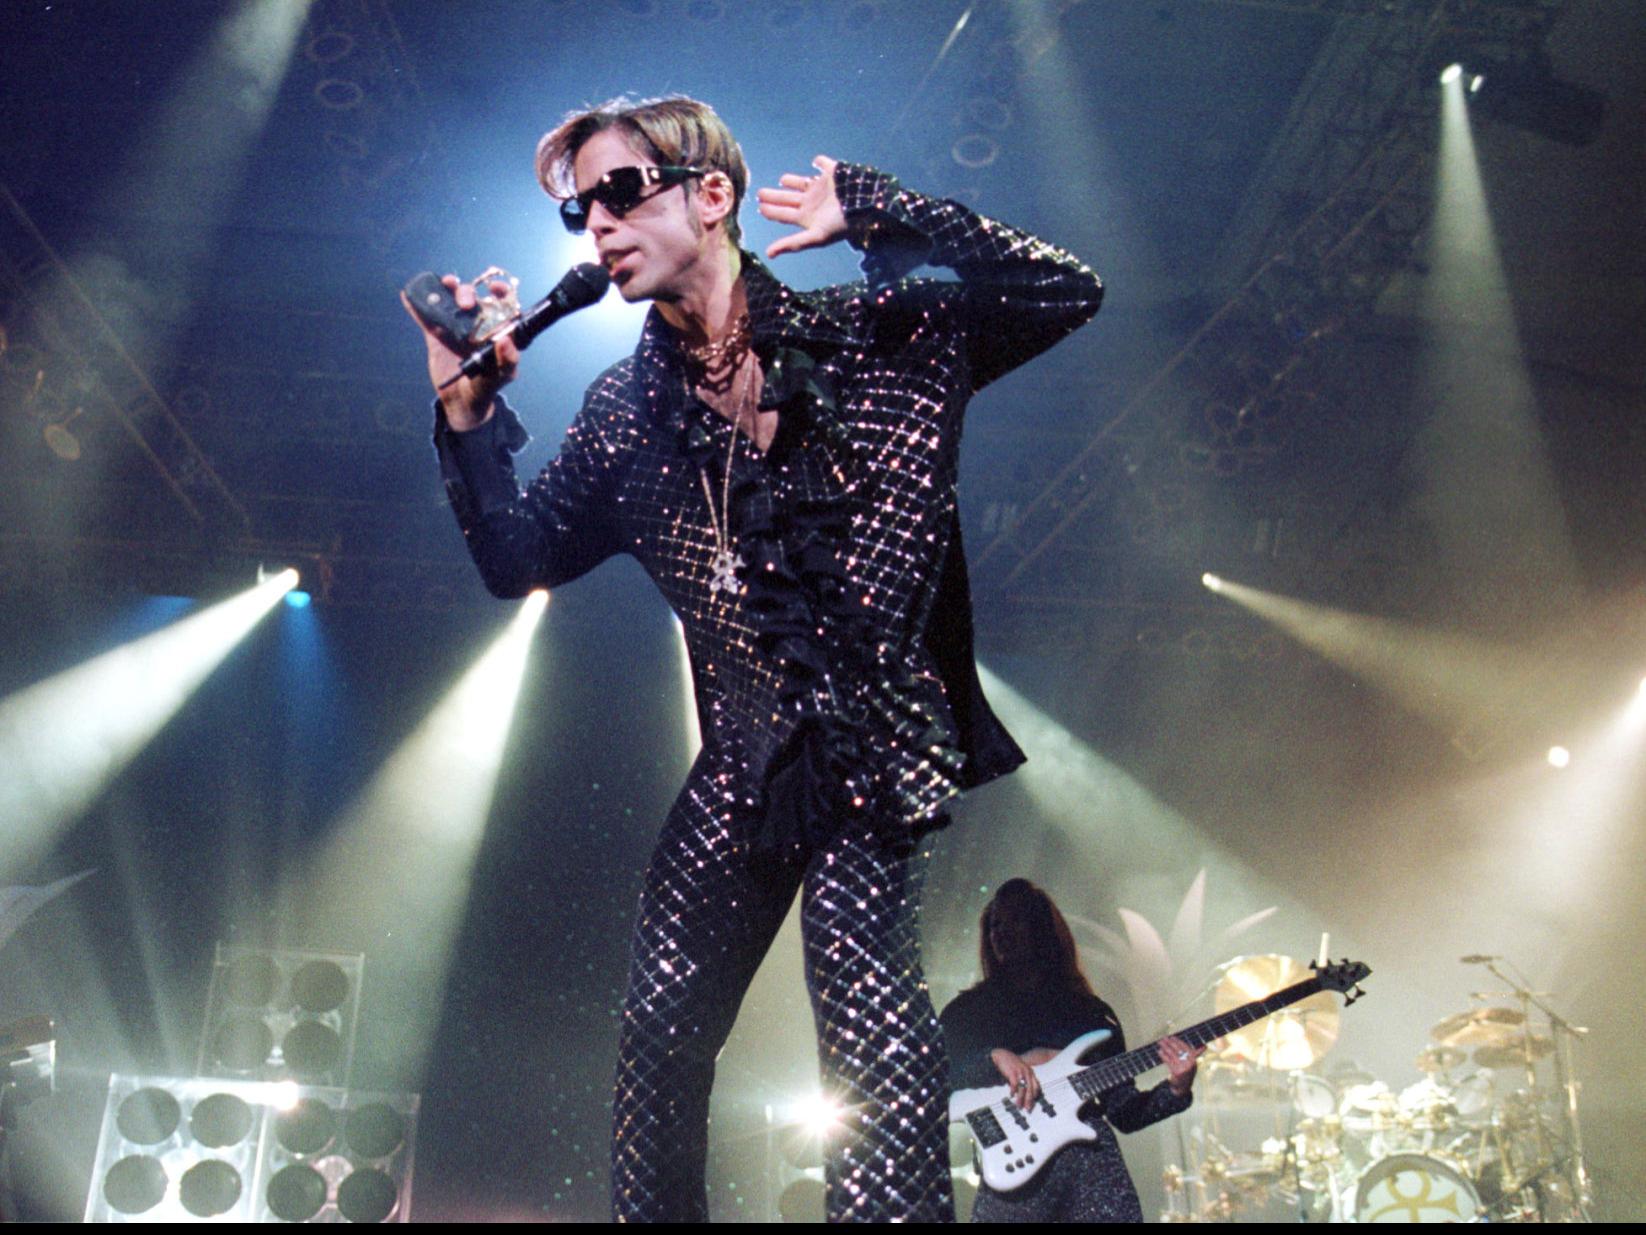 1997 concert review: Prince or not, he dazzles zealous crowd |  Entertainment | omaha.com